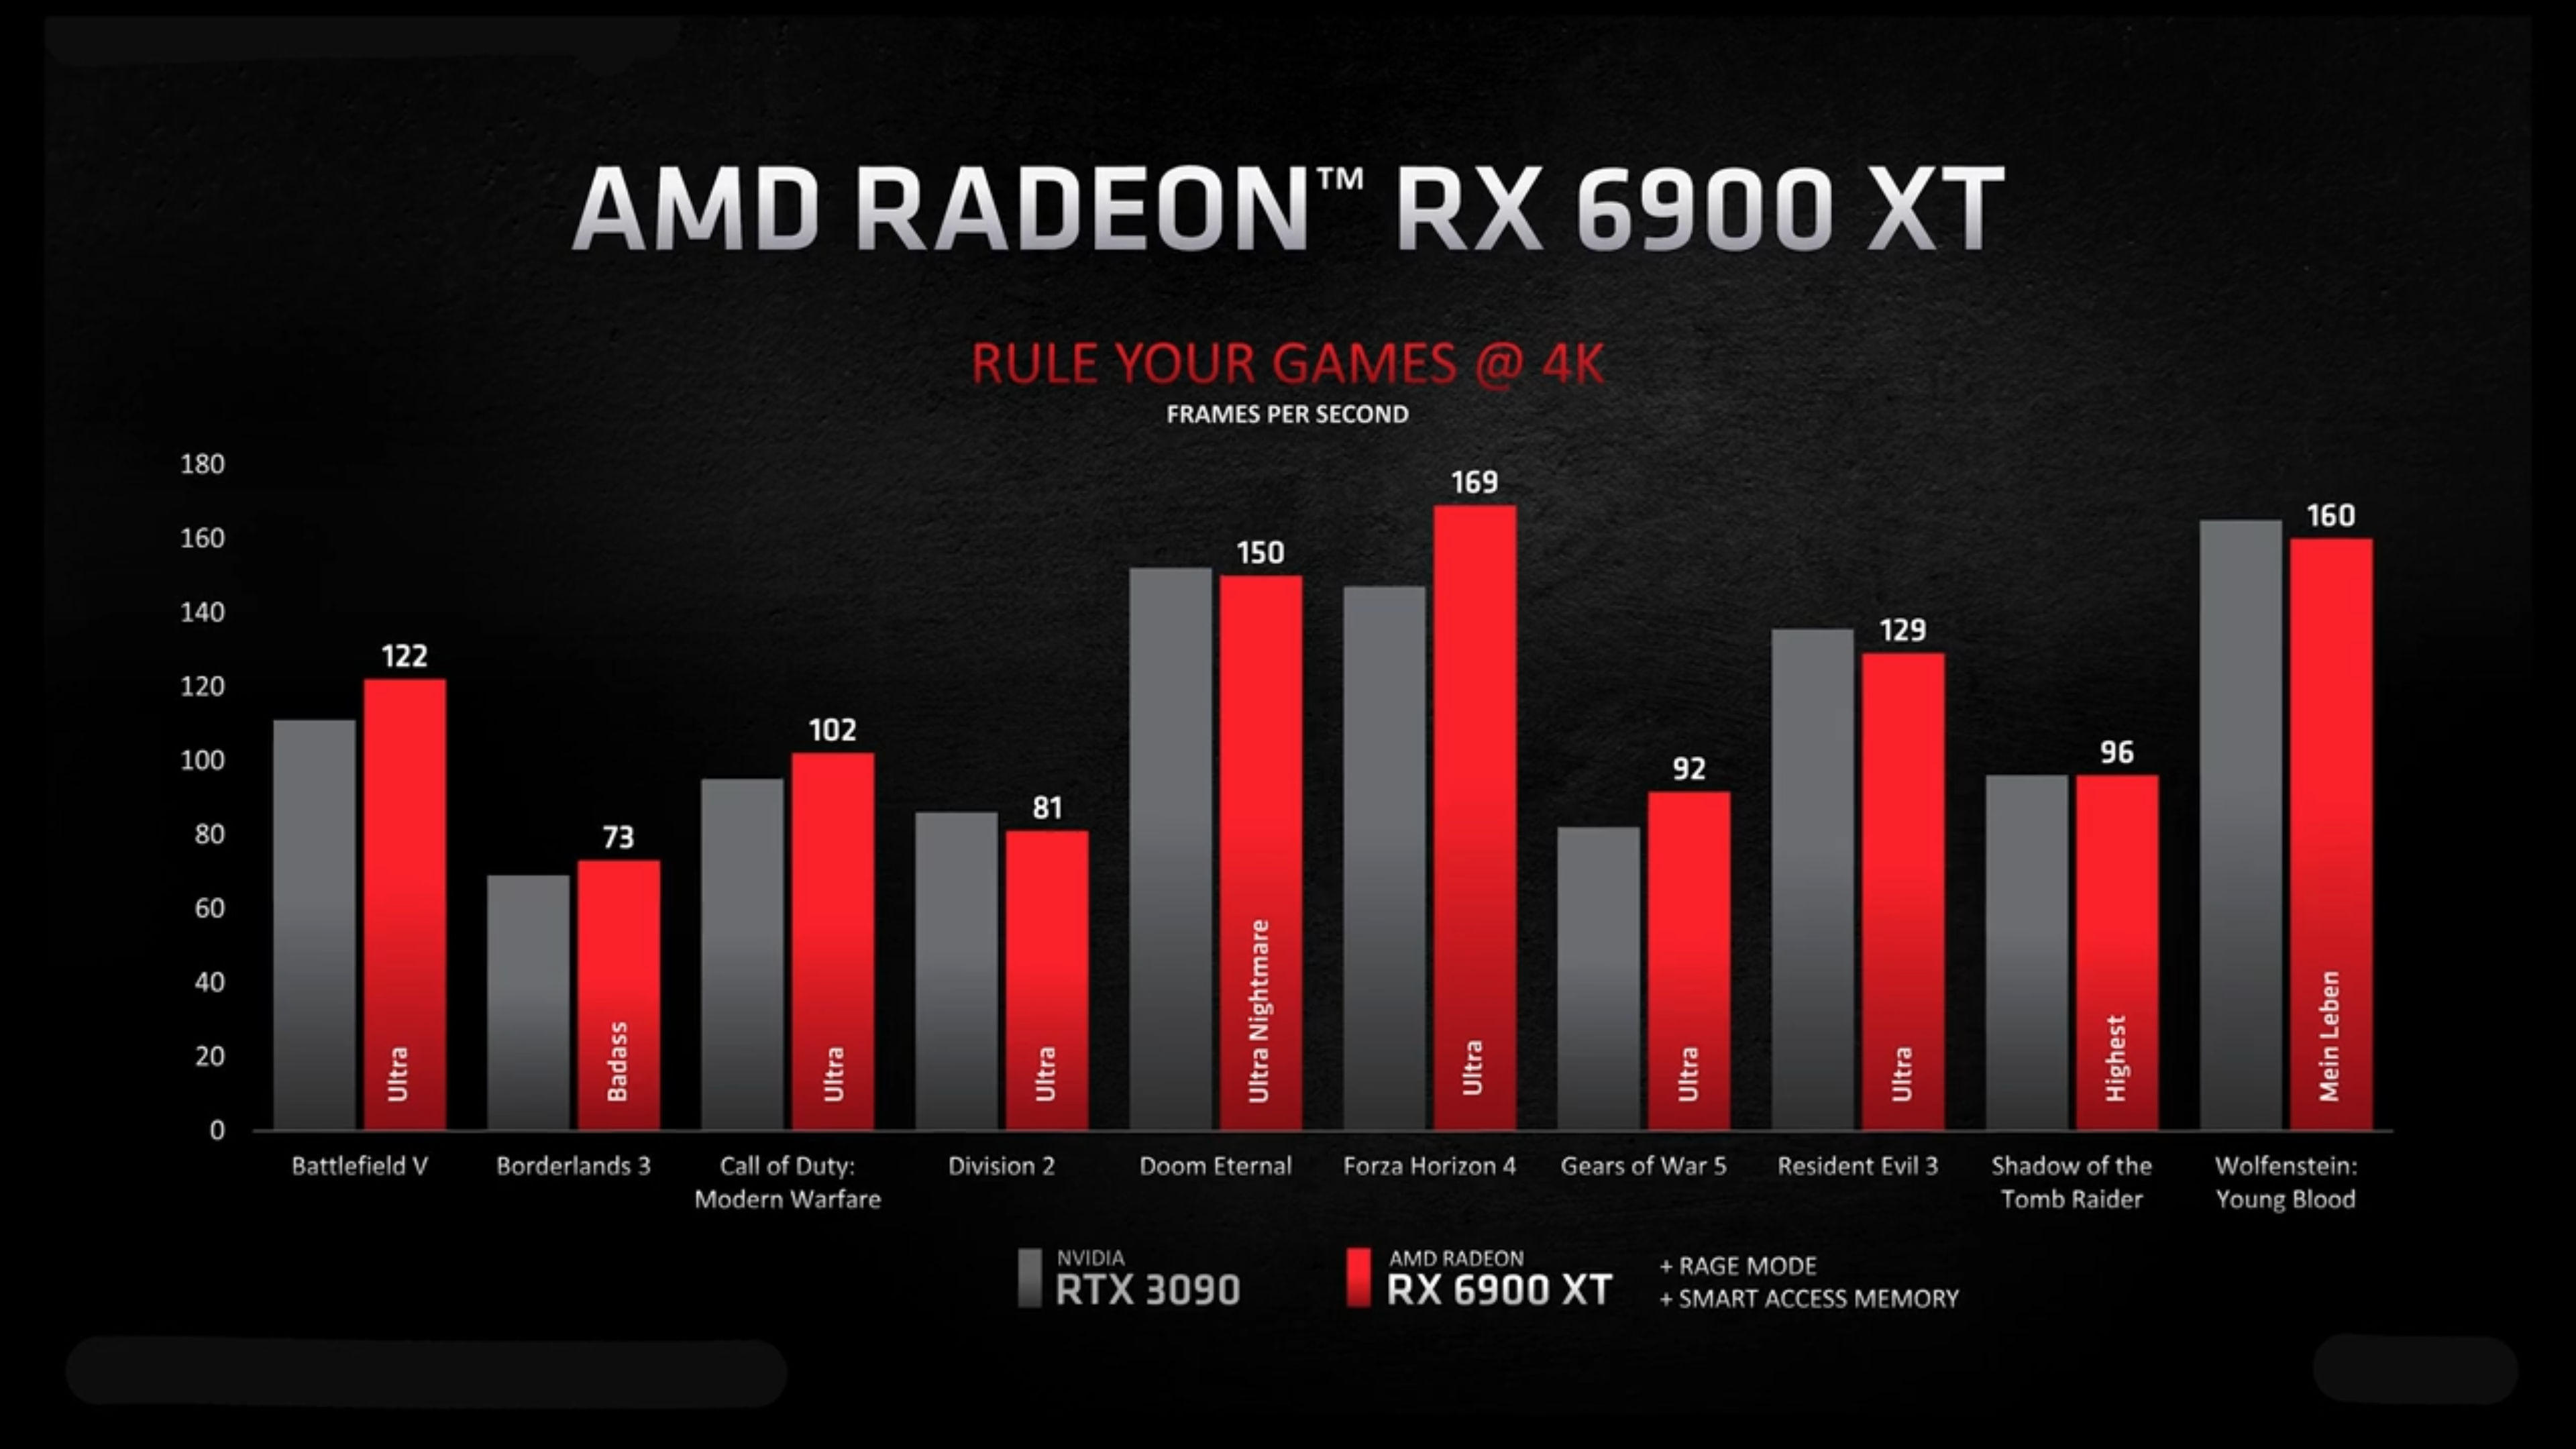 AMD Radeon RX 6900 XT 4K